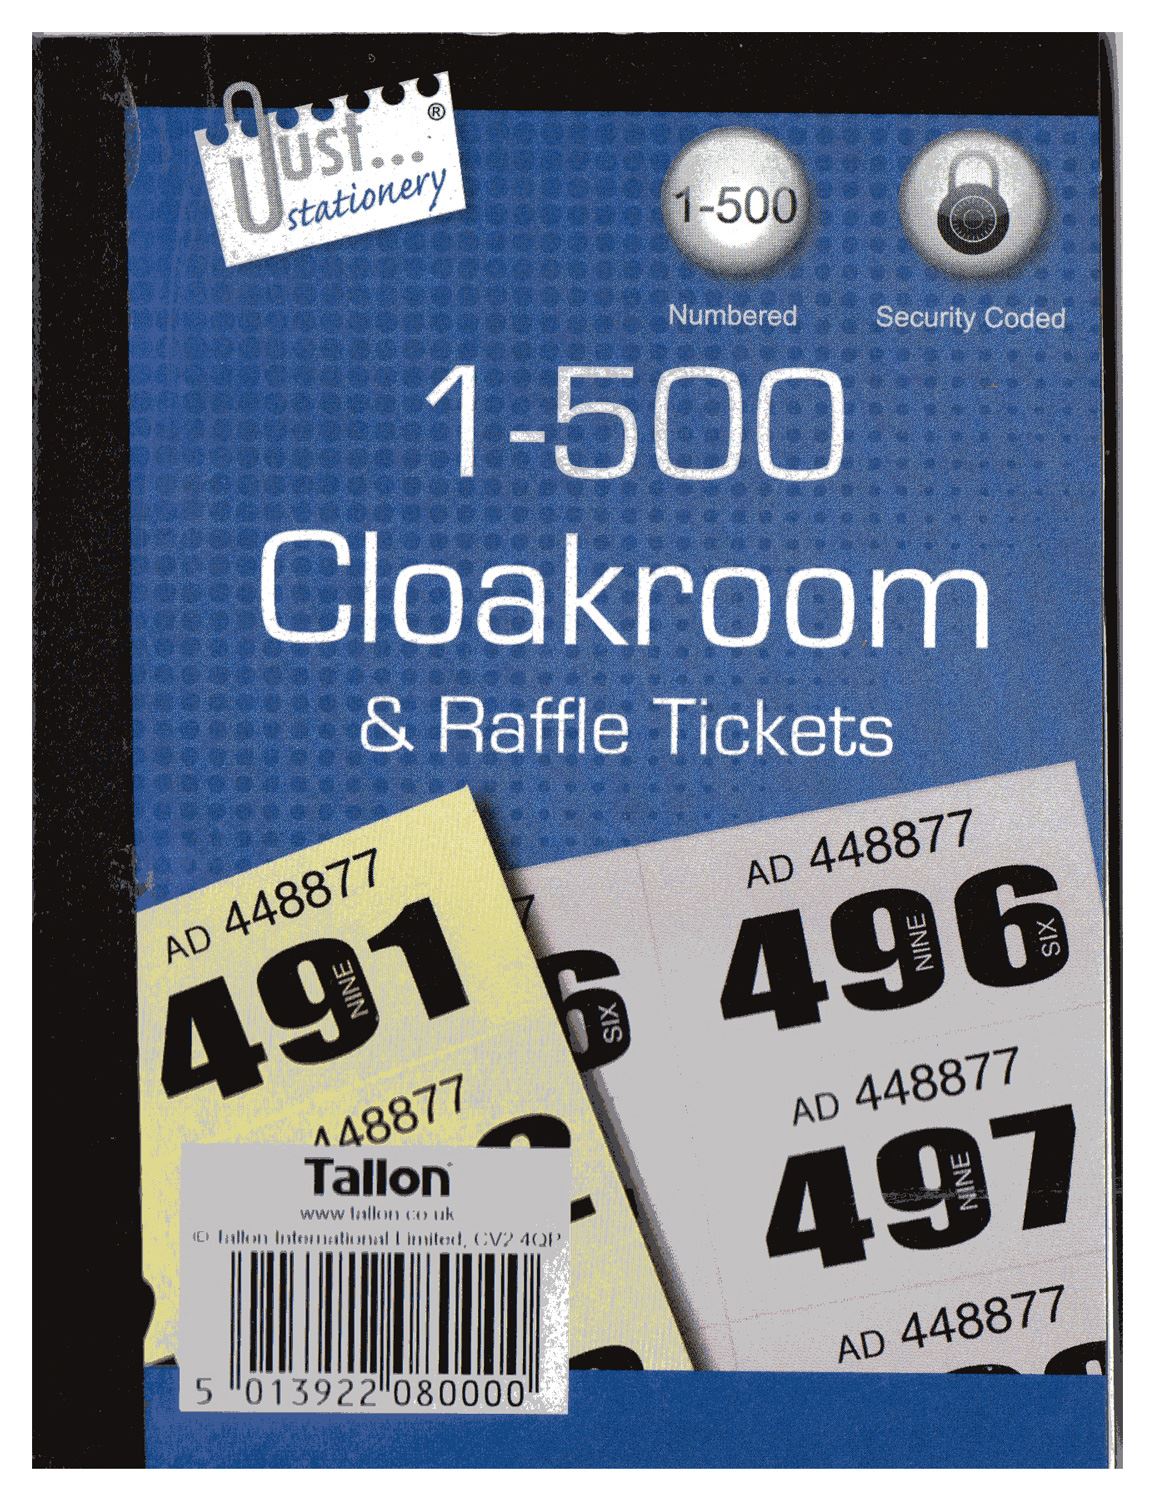 Book of 500 Raffle / Cloakroom Tickets